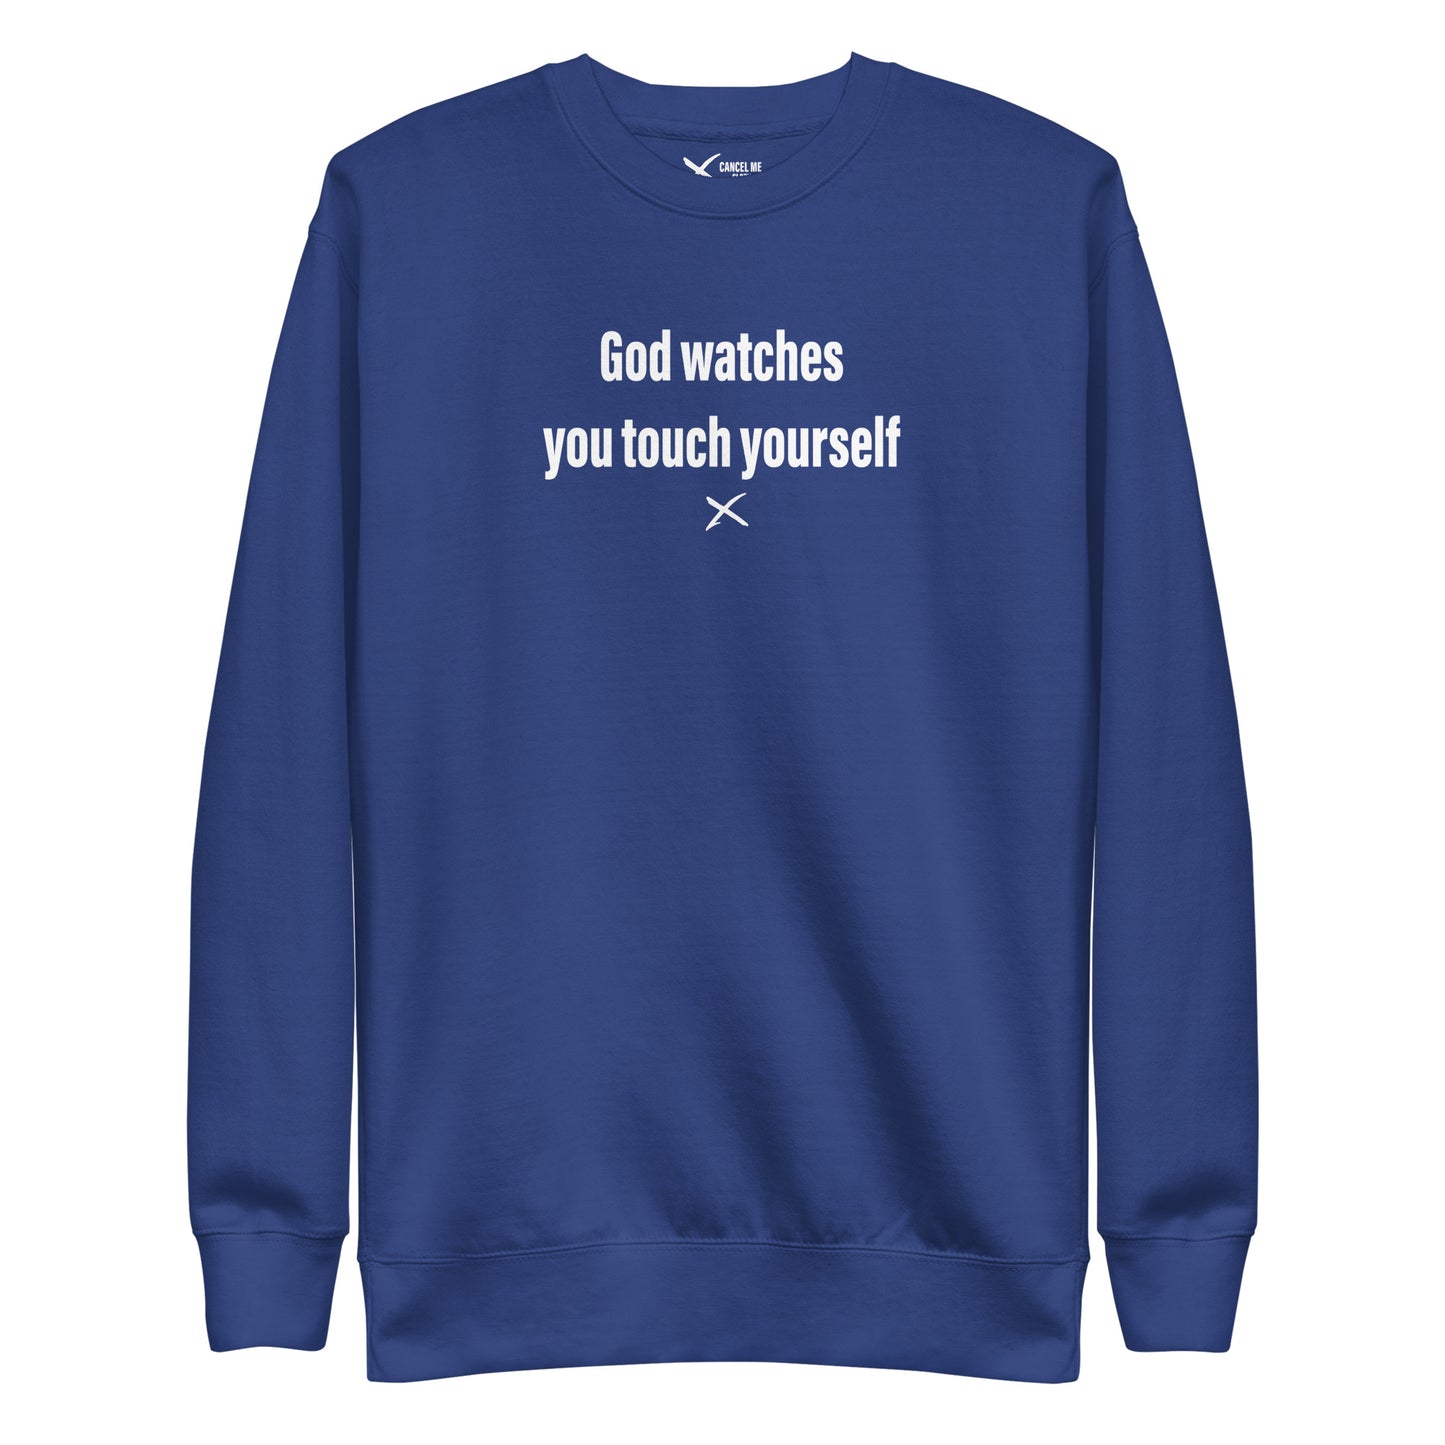 God watches you touch yourself - Sweatshirt